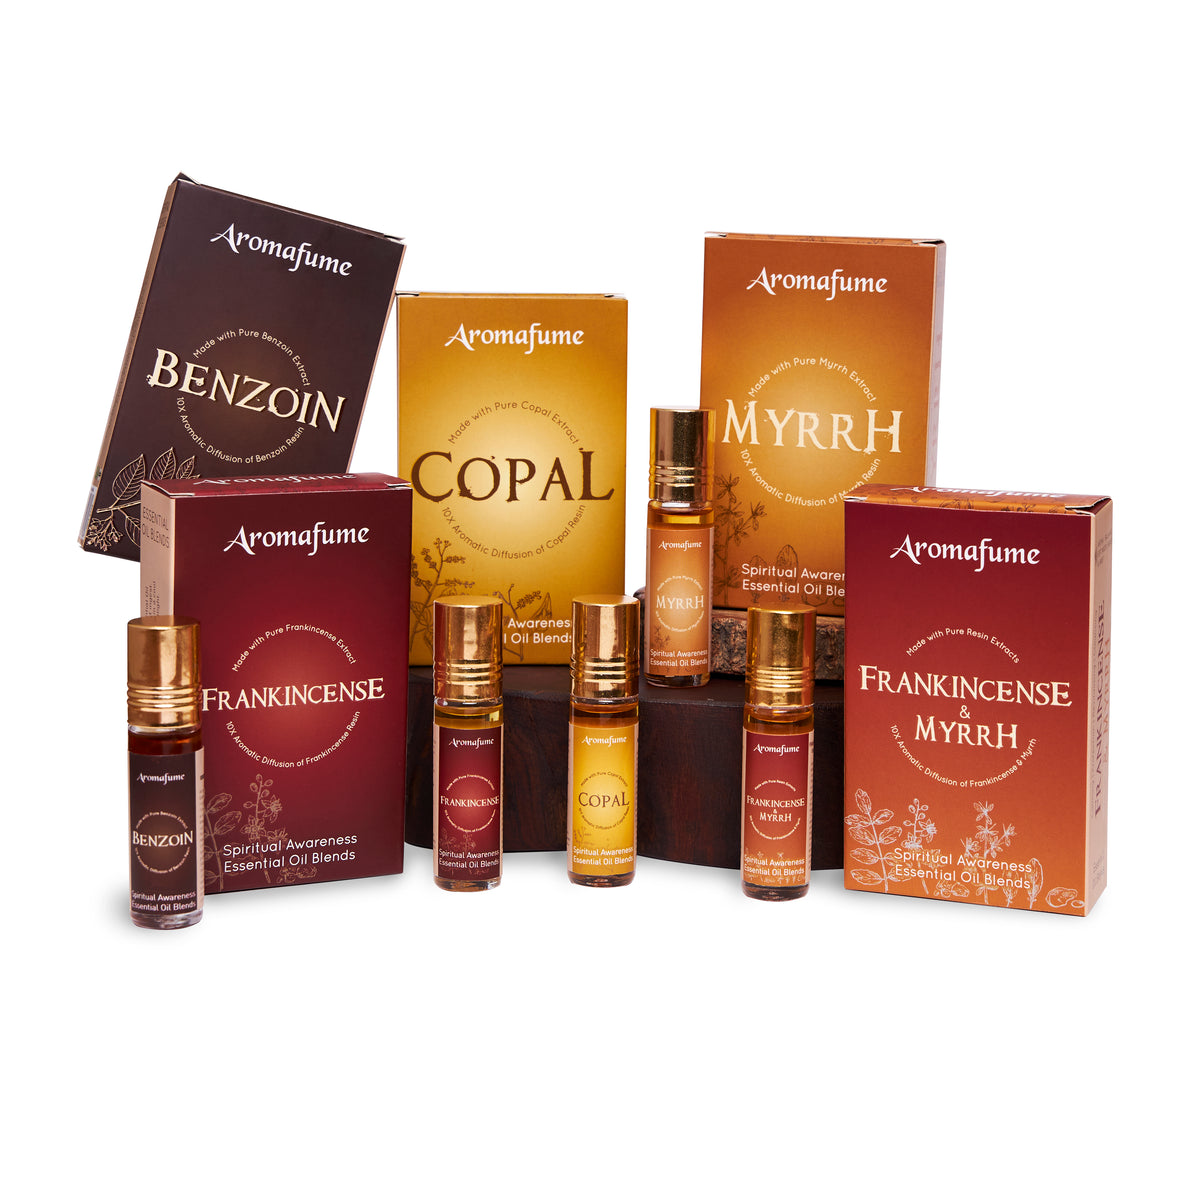 Epifit Waxness Aromatheraphy Waxing Essential Oil Frankincense Myrrh Balance Purify .33 oz / 10 ml